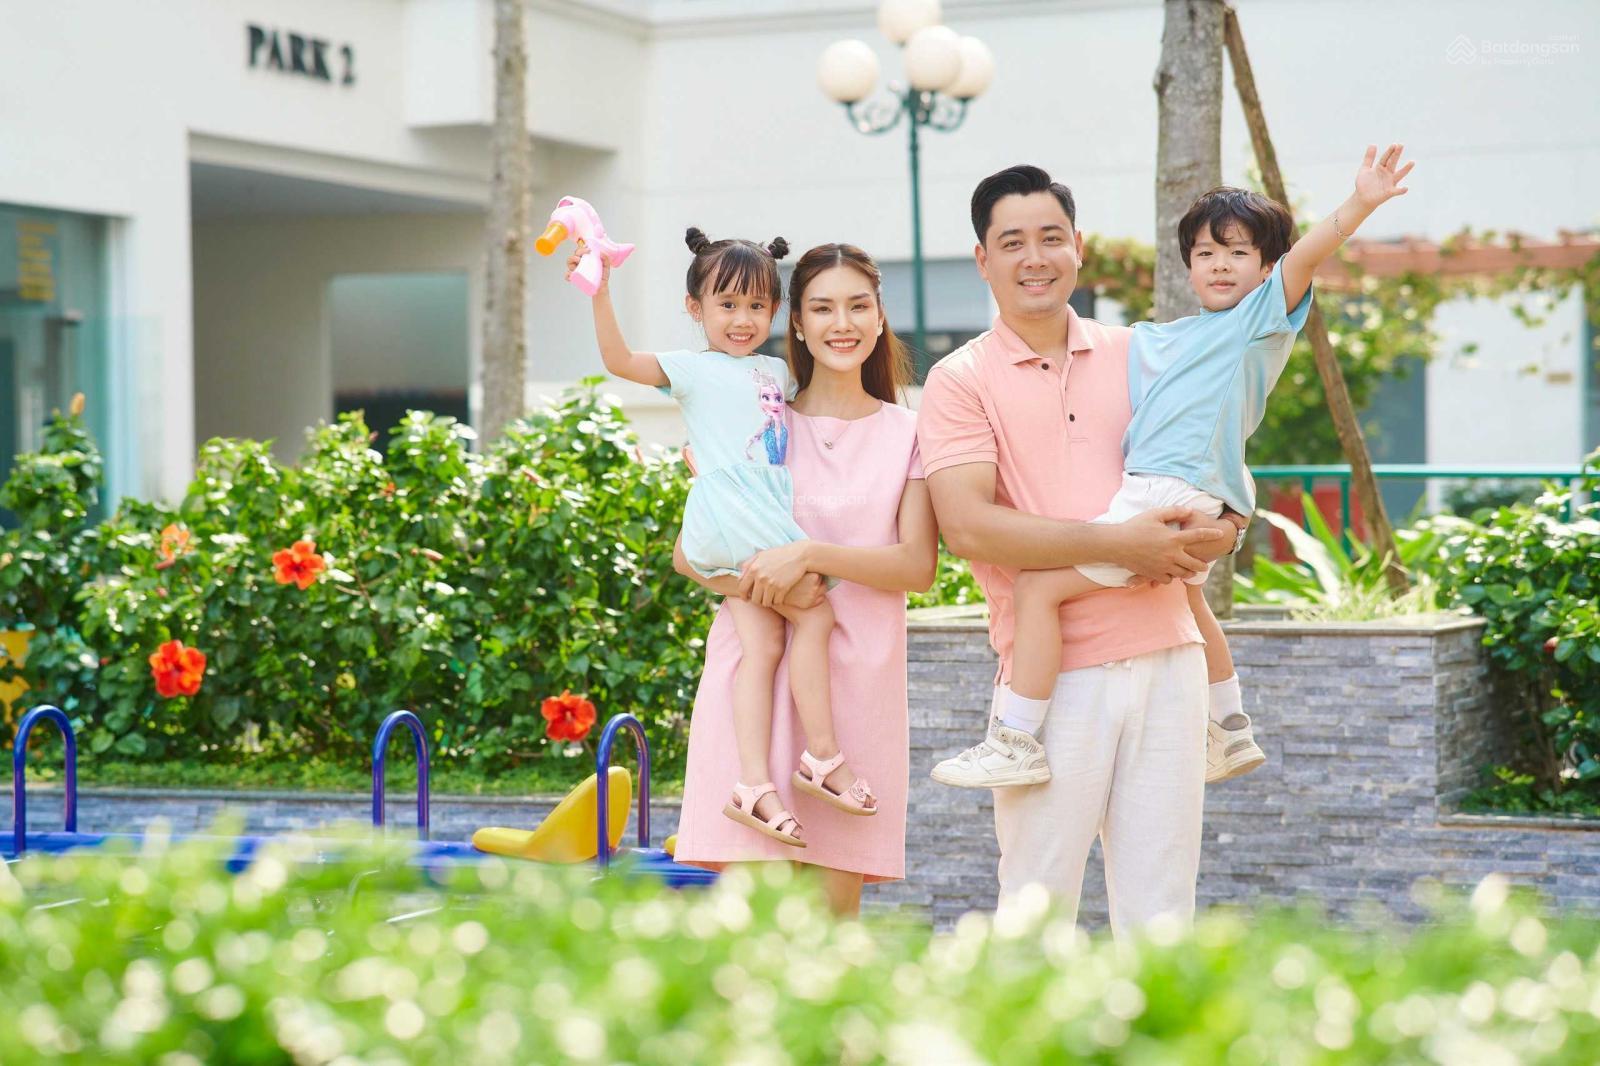 Cơ hội "cuối cùng" mua nhà tại Hà Nội - từ 2,2 tỷ sở hữu căn 3PN và 1.9 tỷ sở hữu căn hộ 2PN 4